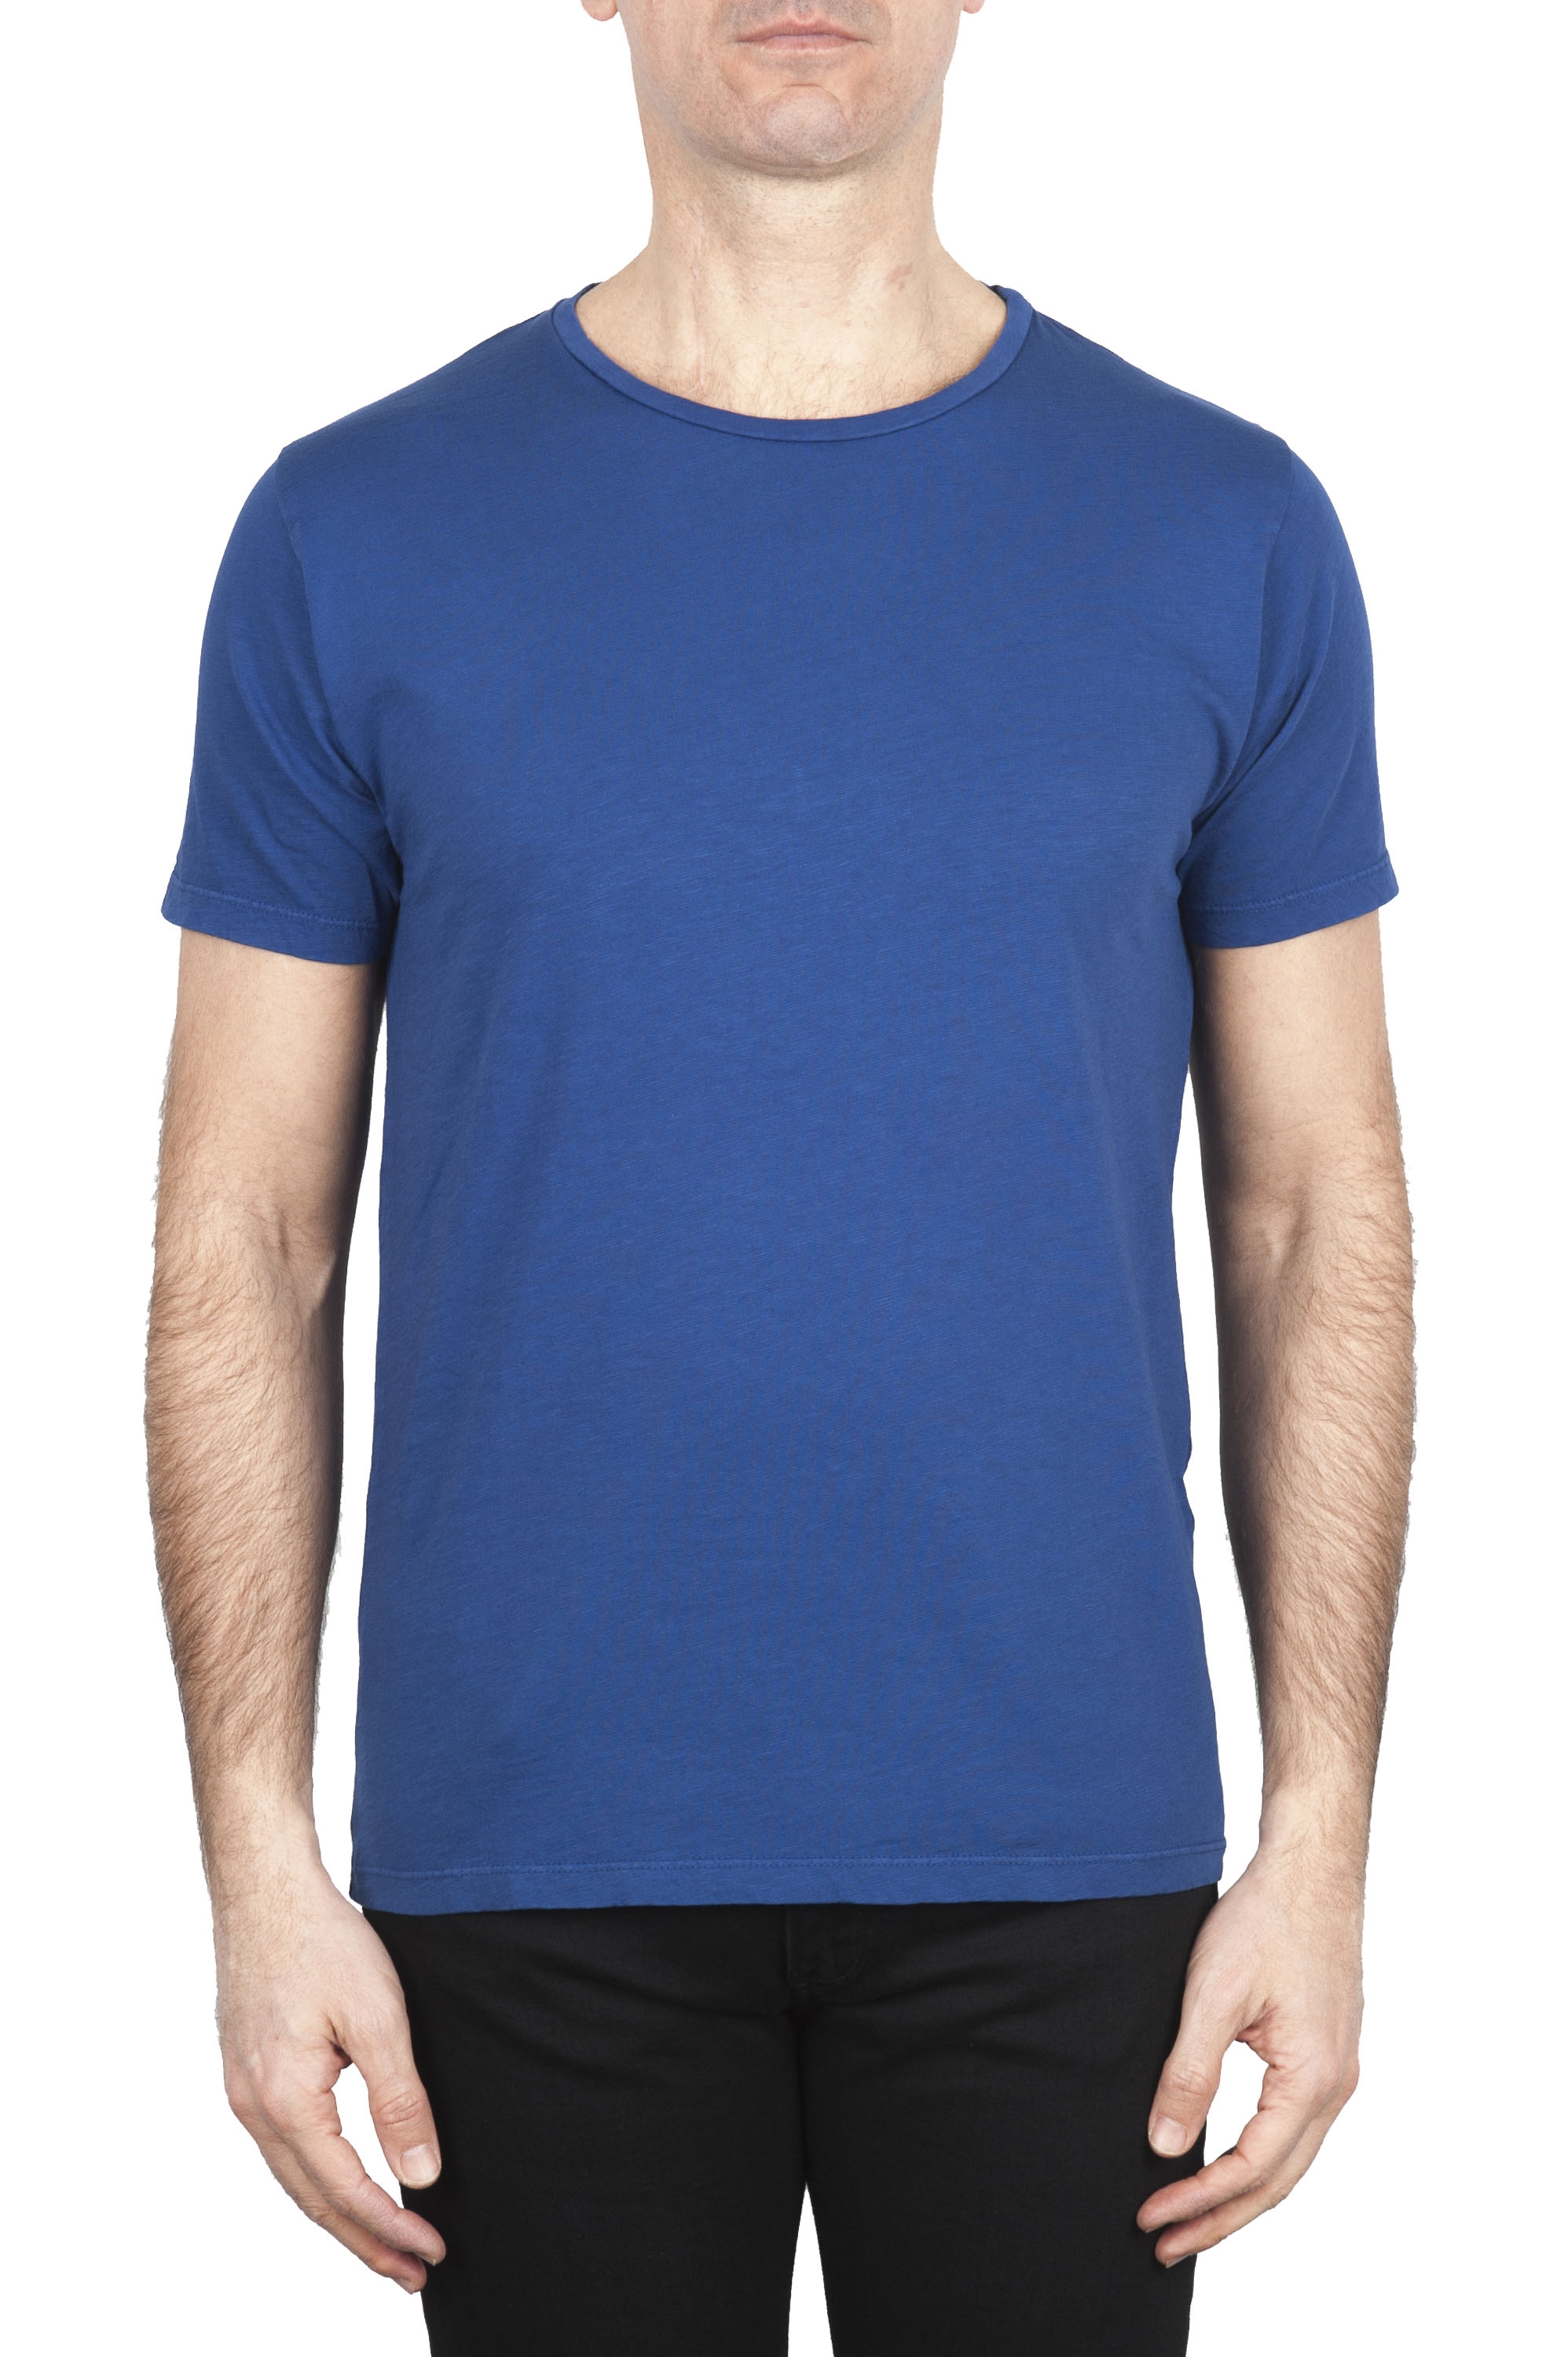 SBU 01649 Flamed cotton scoop neck t-shirt blue 01